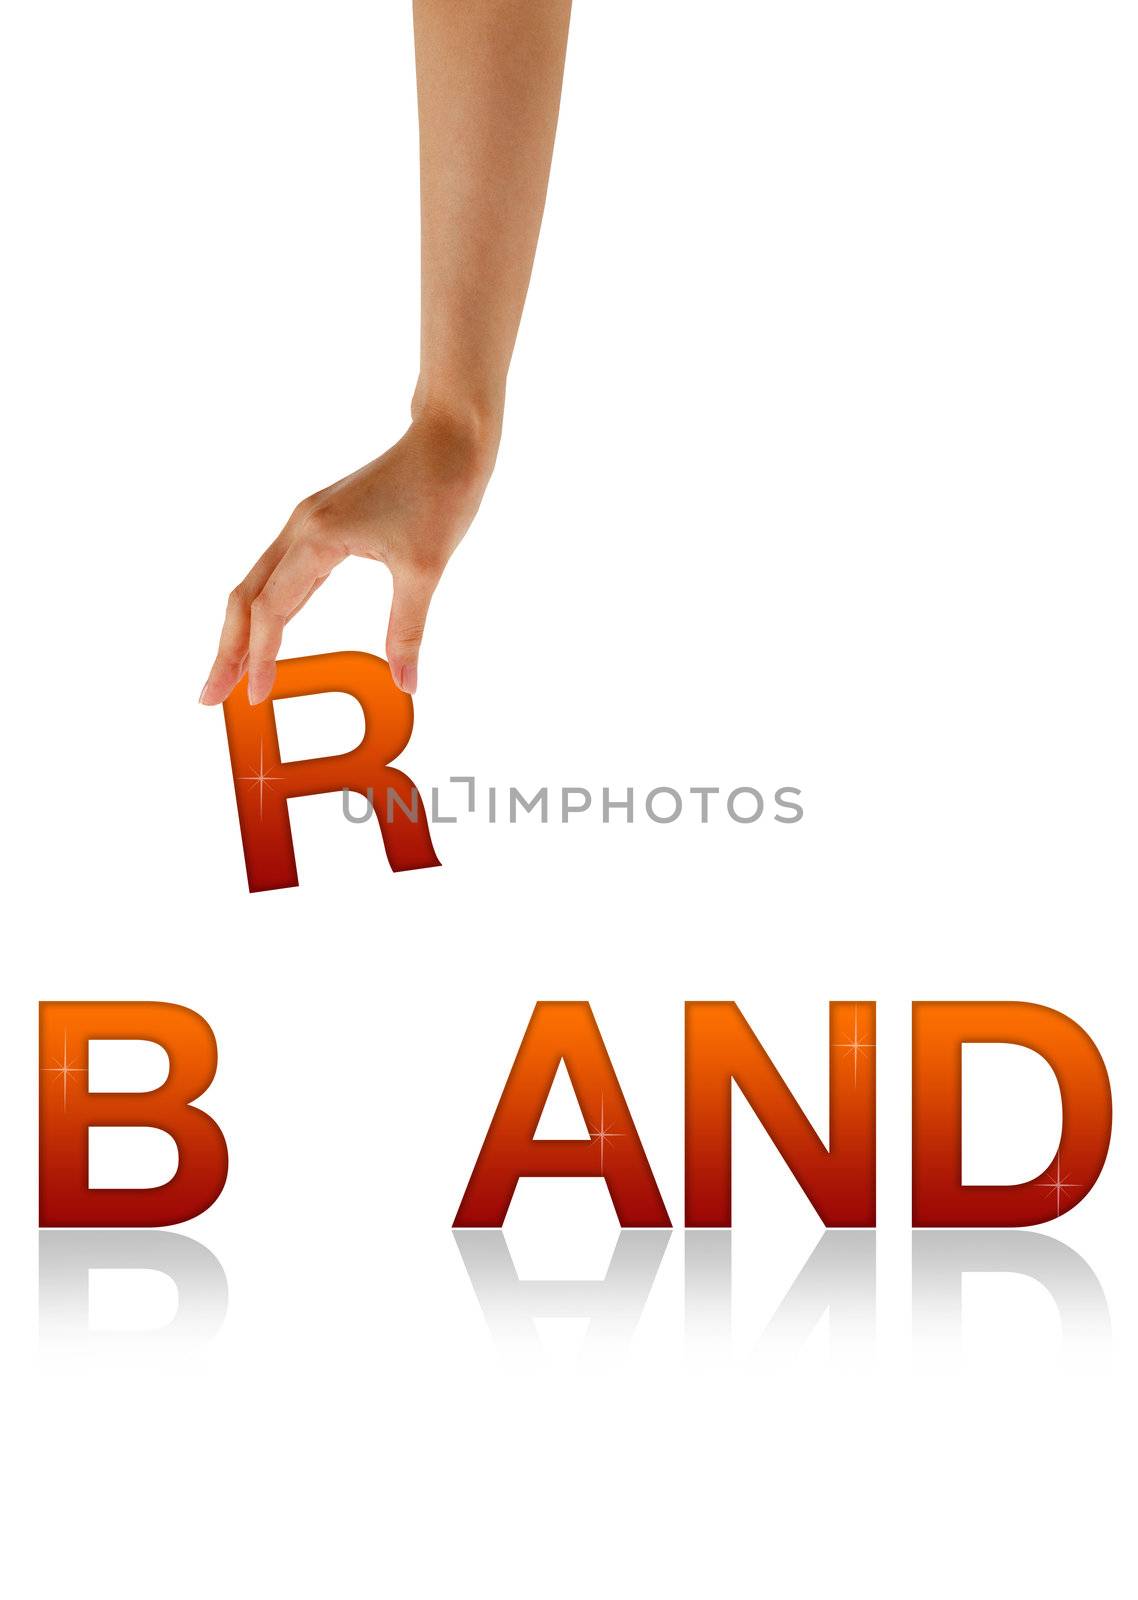 Brand - Hand by kbuntu